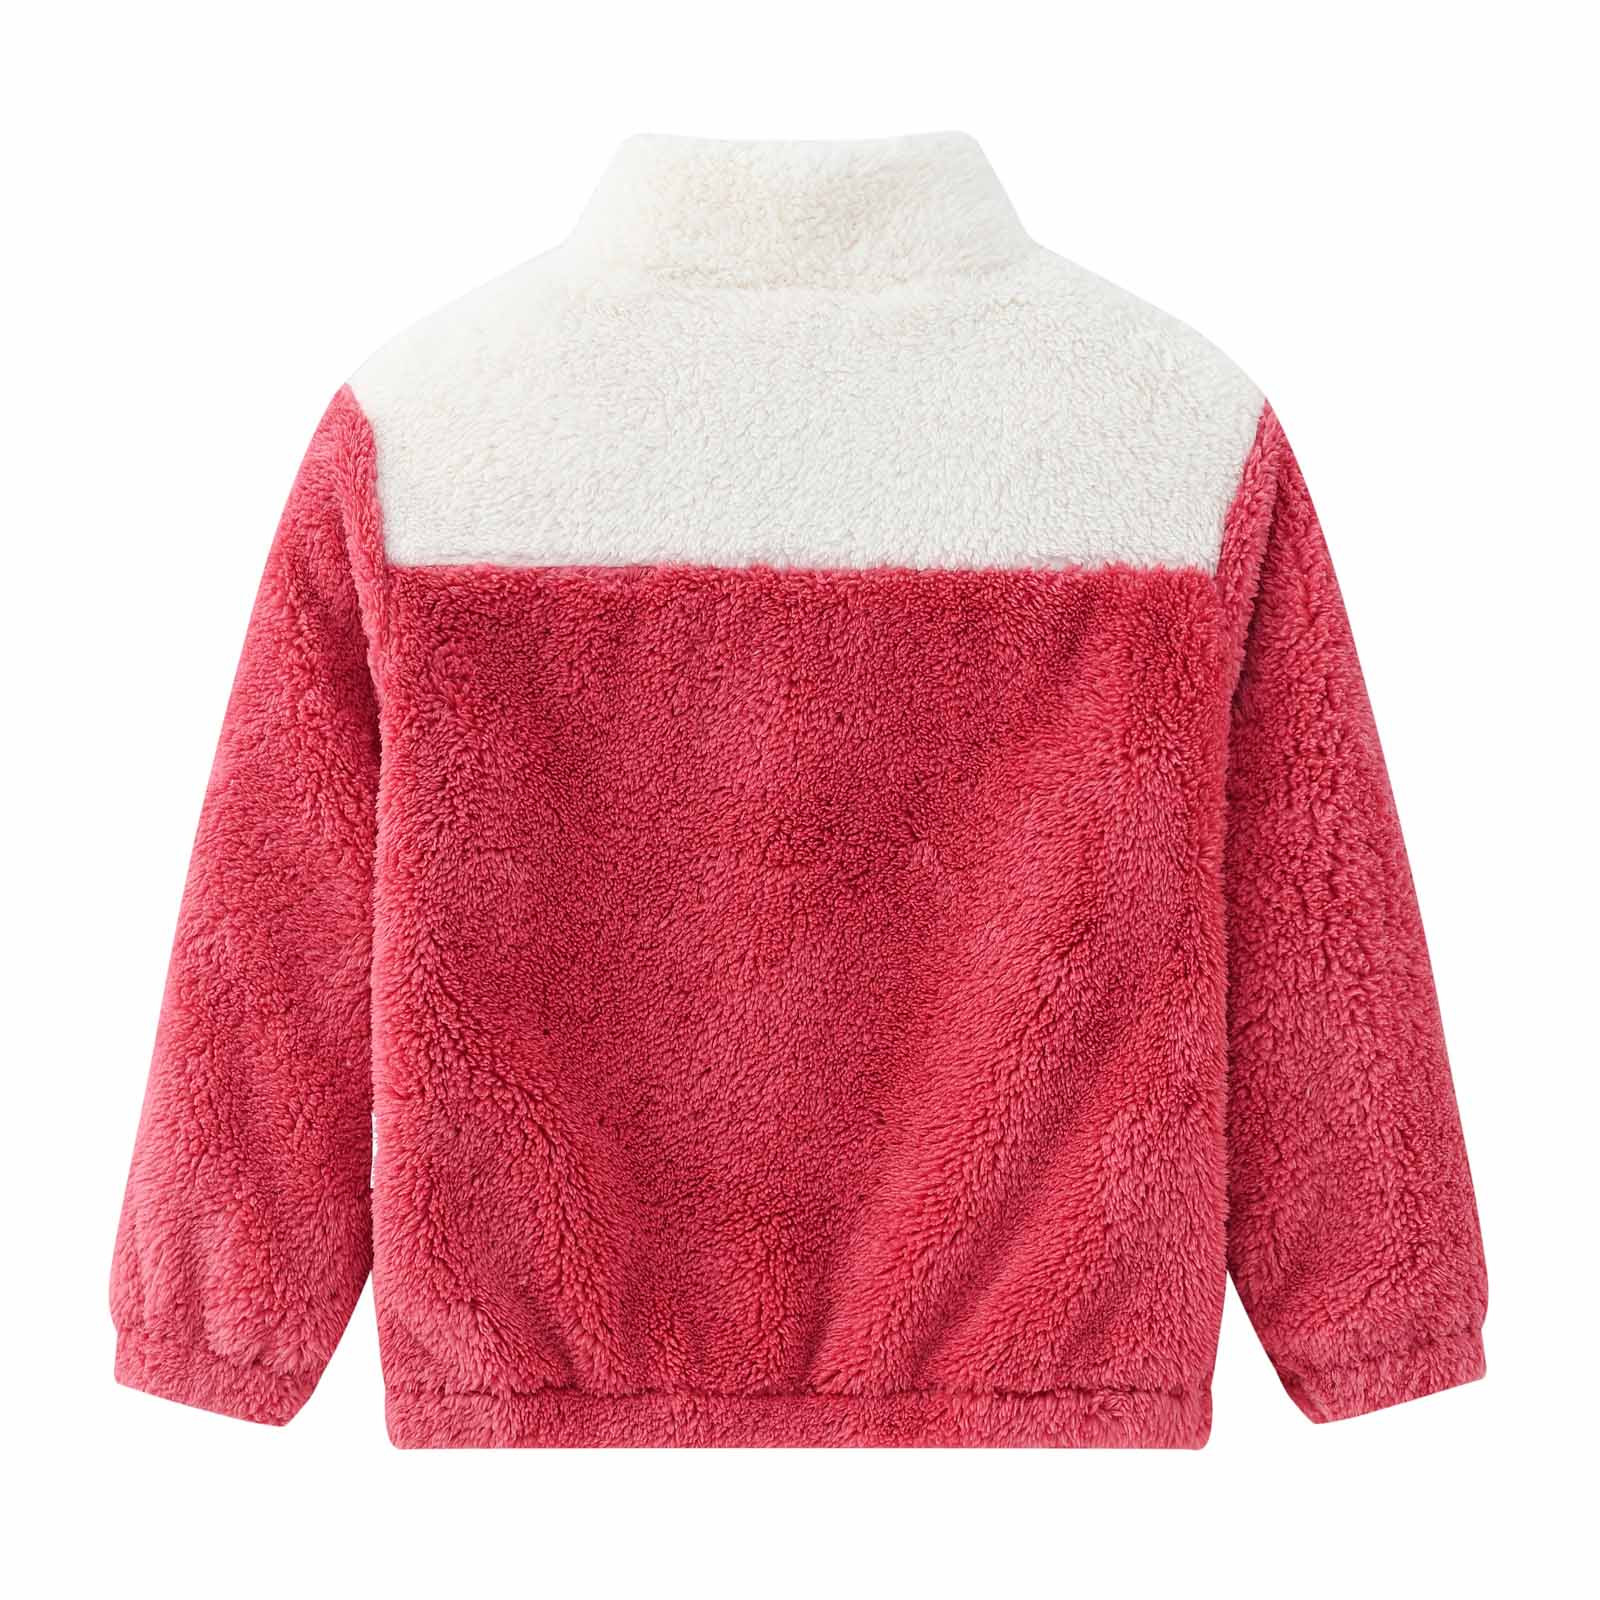 YYDGH Girls Zipper Jacket Fuzzy Sweatshirt Long Sleeve Casual Cozy Fleece Sherpa Outwear Coat Full-Zip Rainbow Jackets(Red,7-8 Years) - image 4 of 8